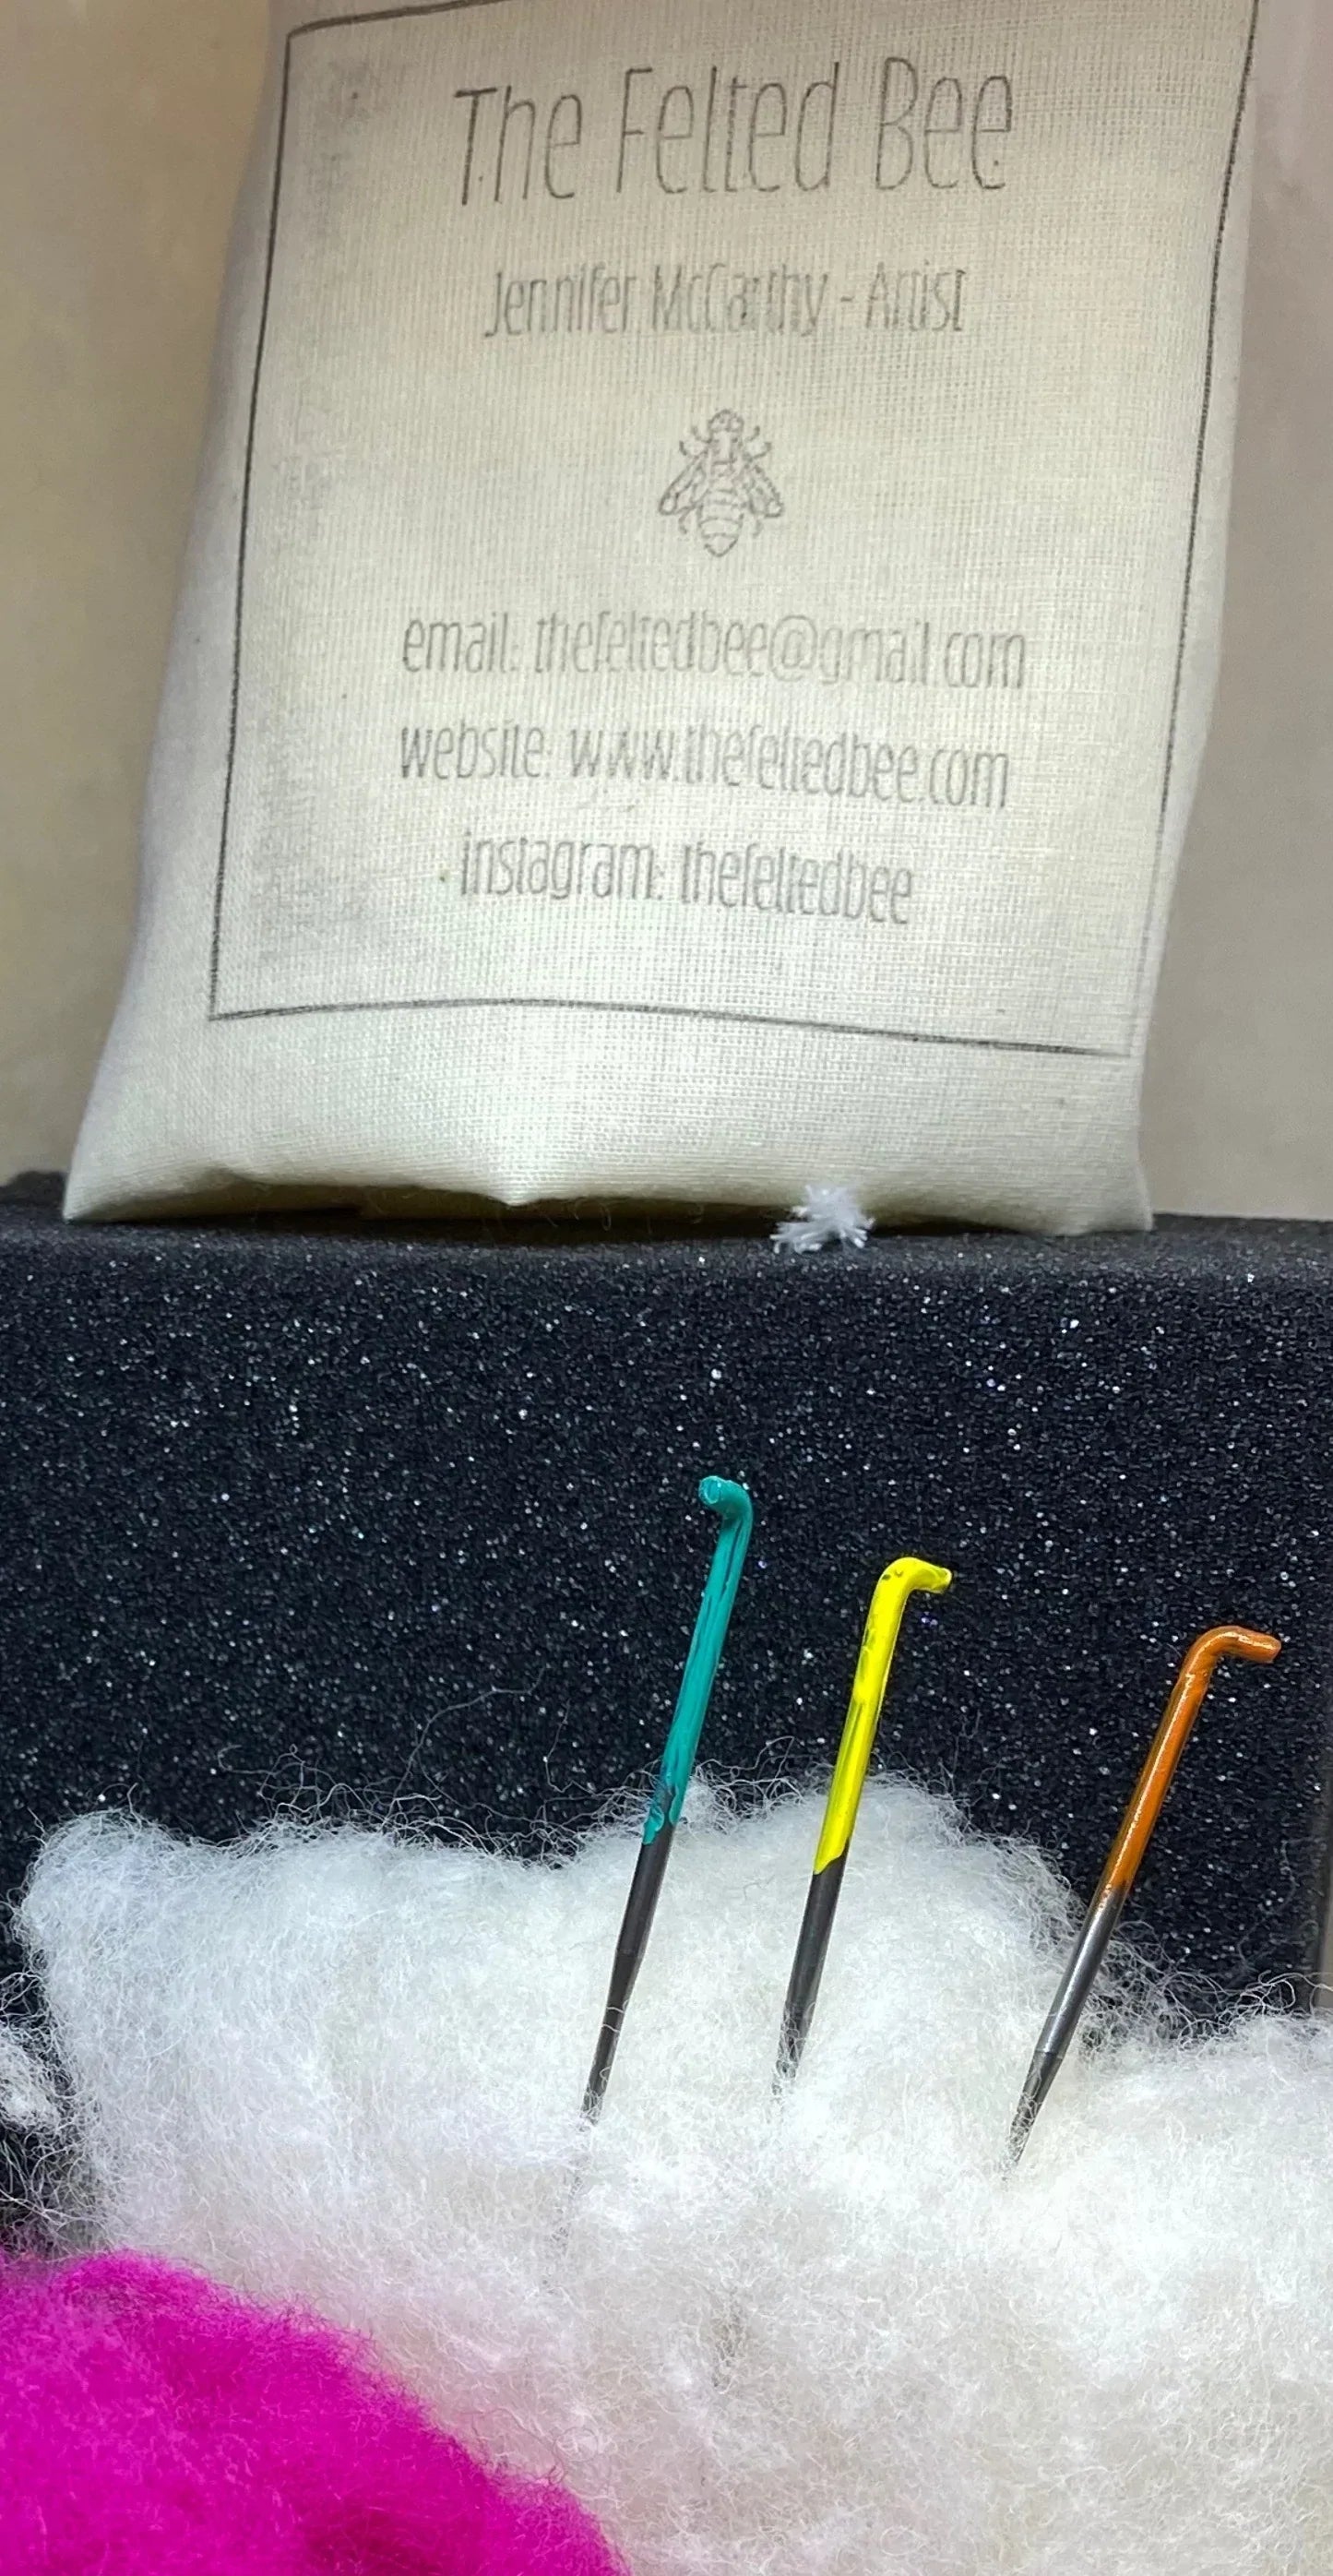 Rainbow Needle Felting Kit